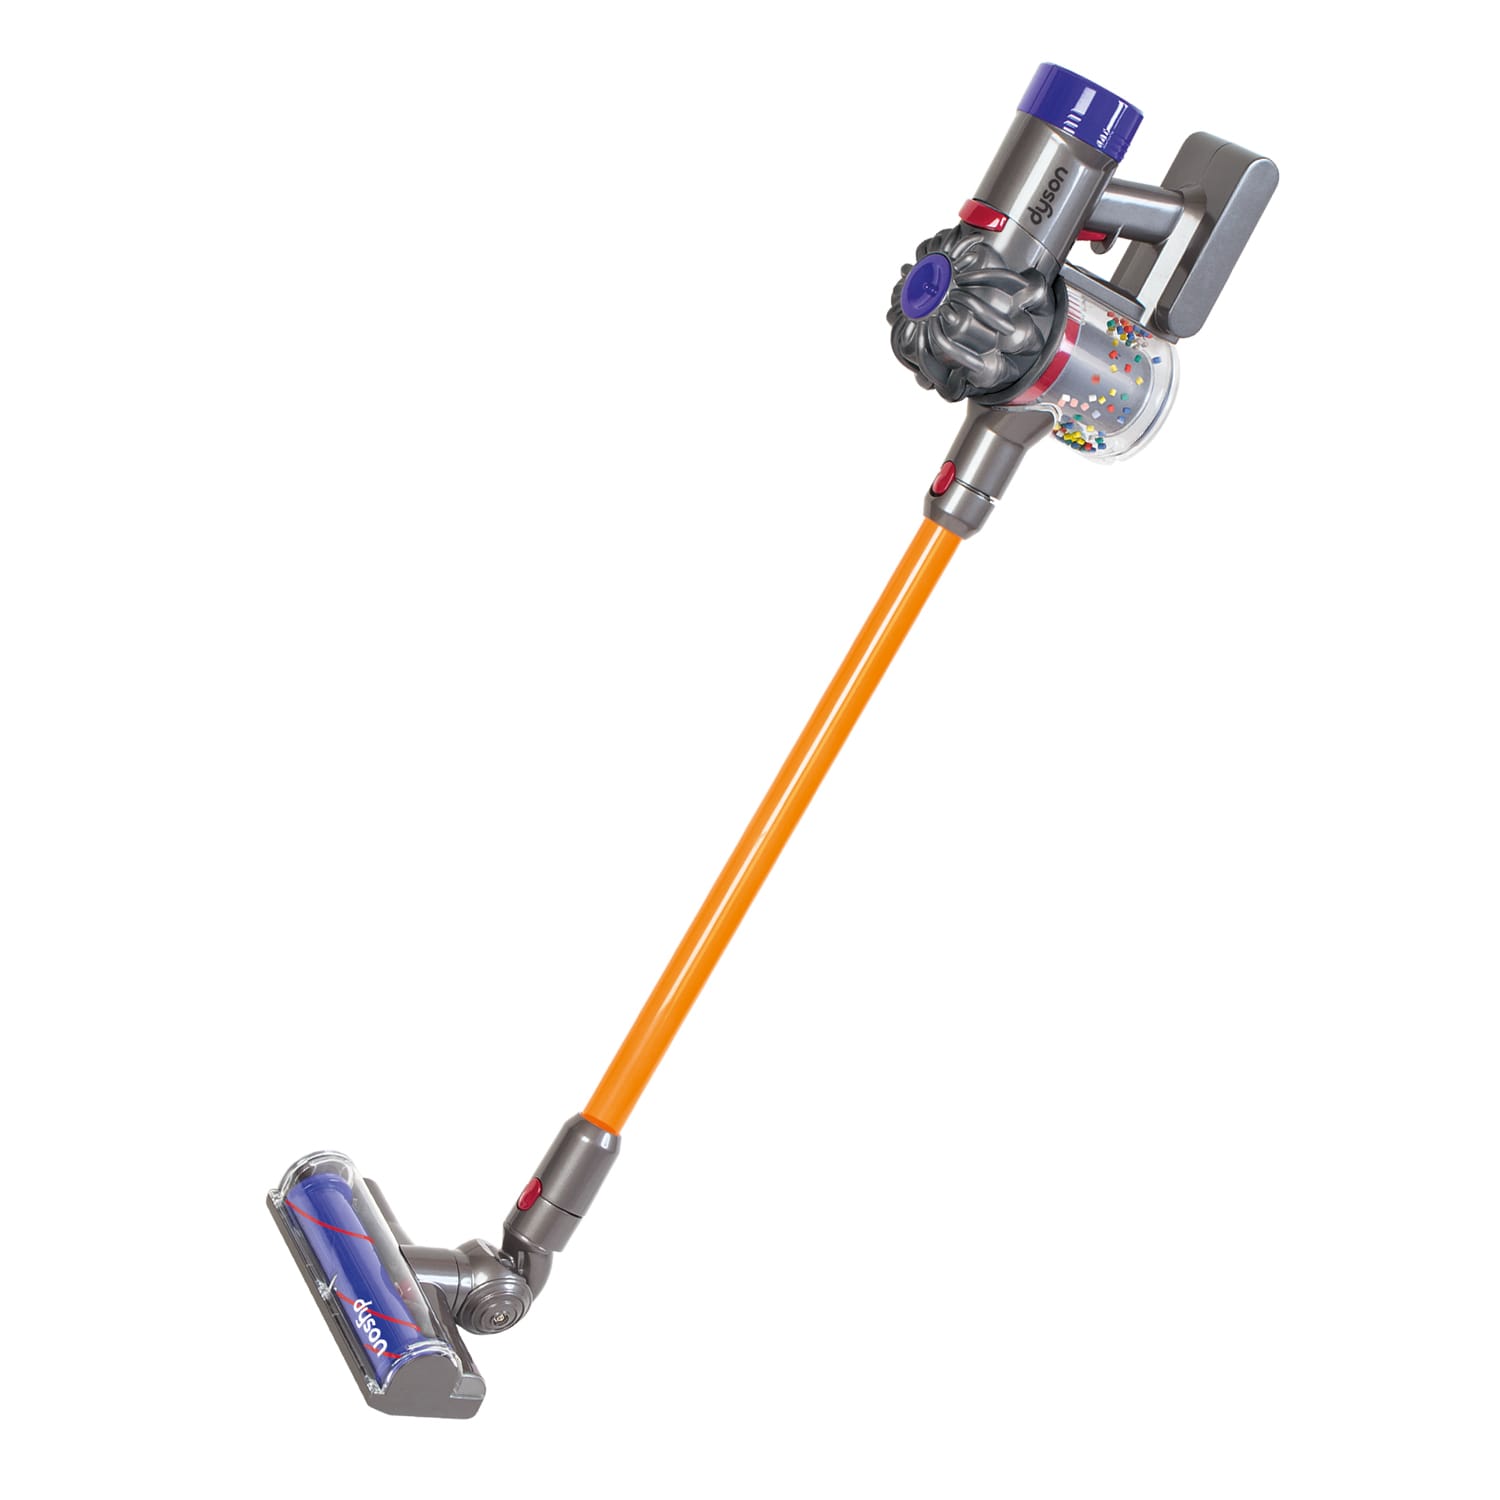 Casdon - Dyson Cord Free Vacuum Toy